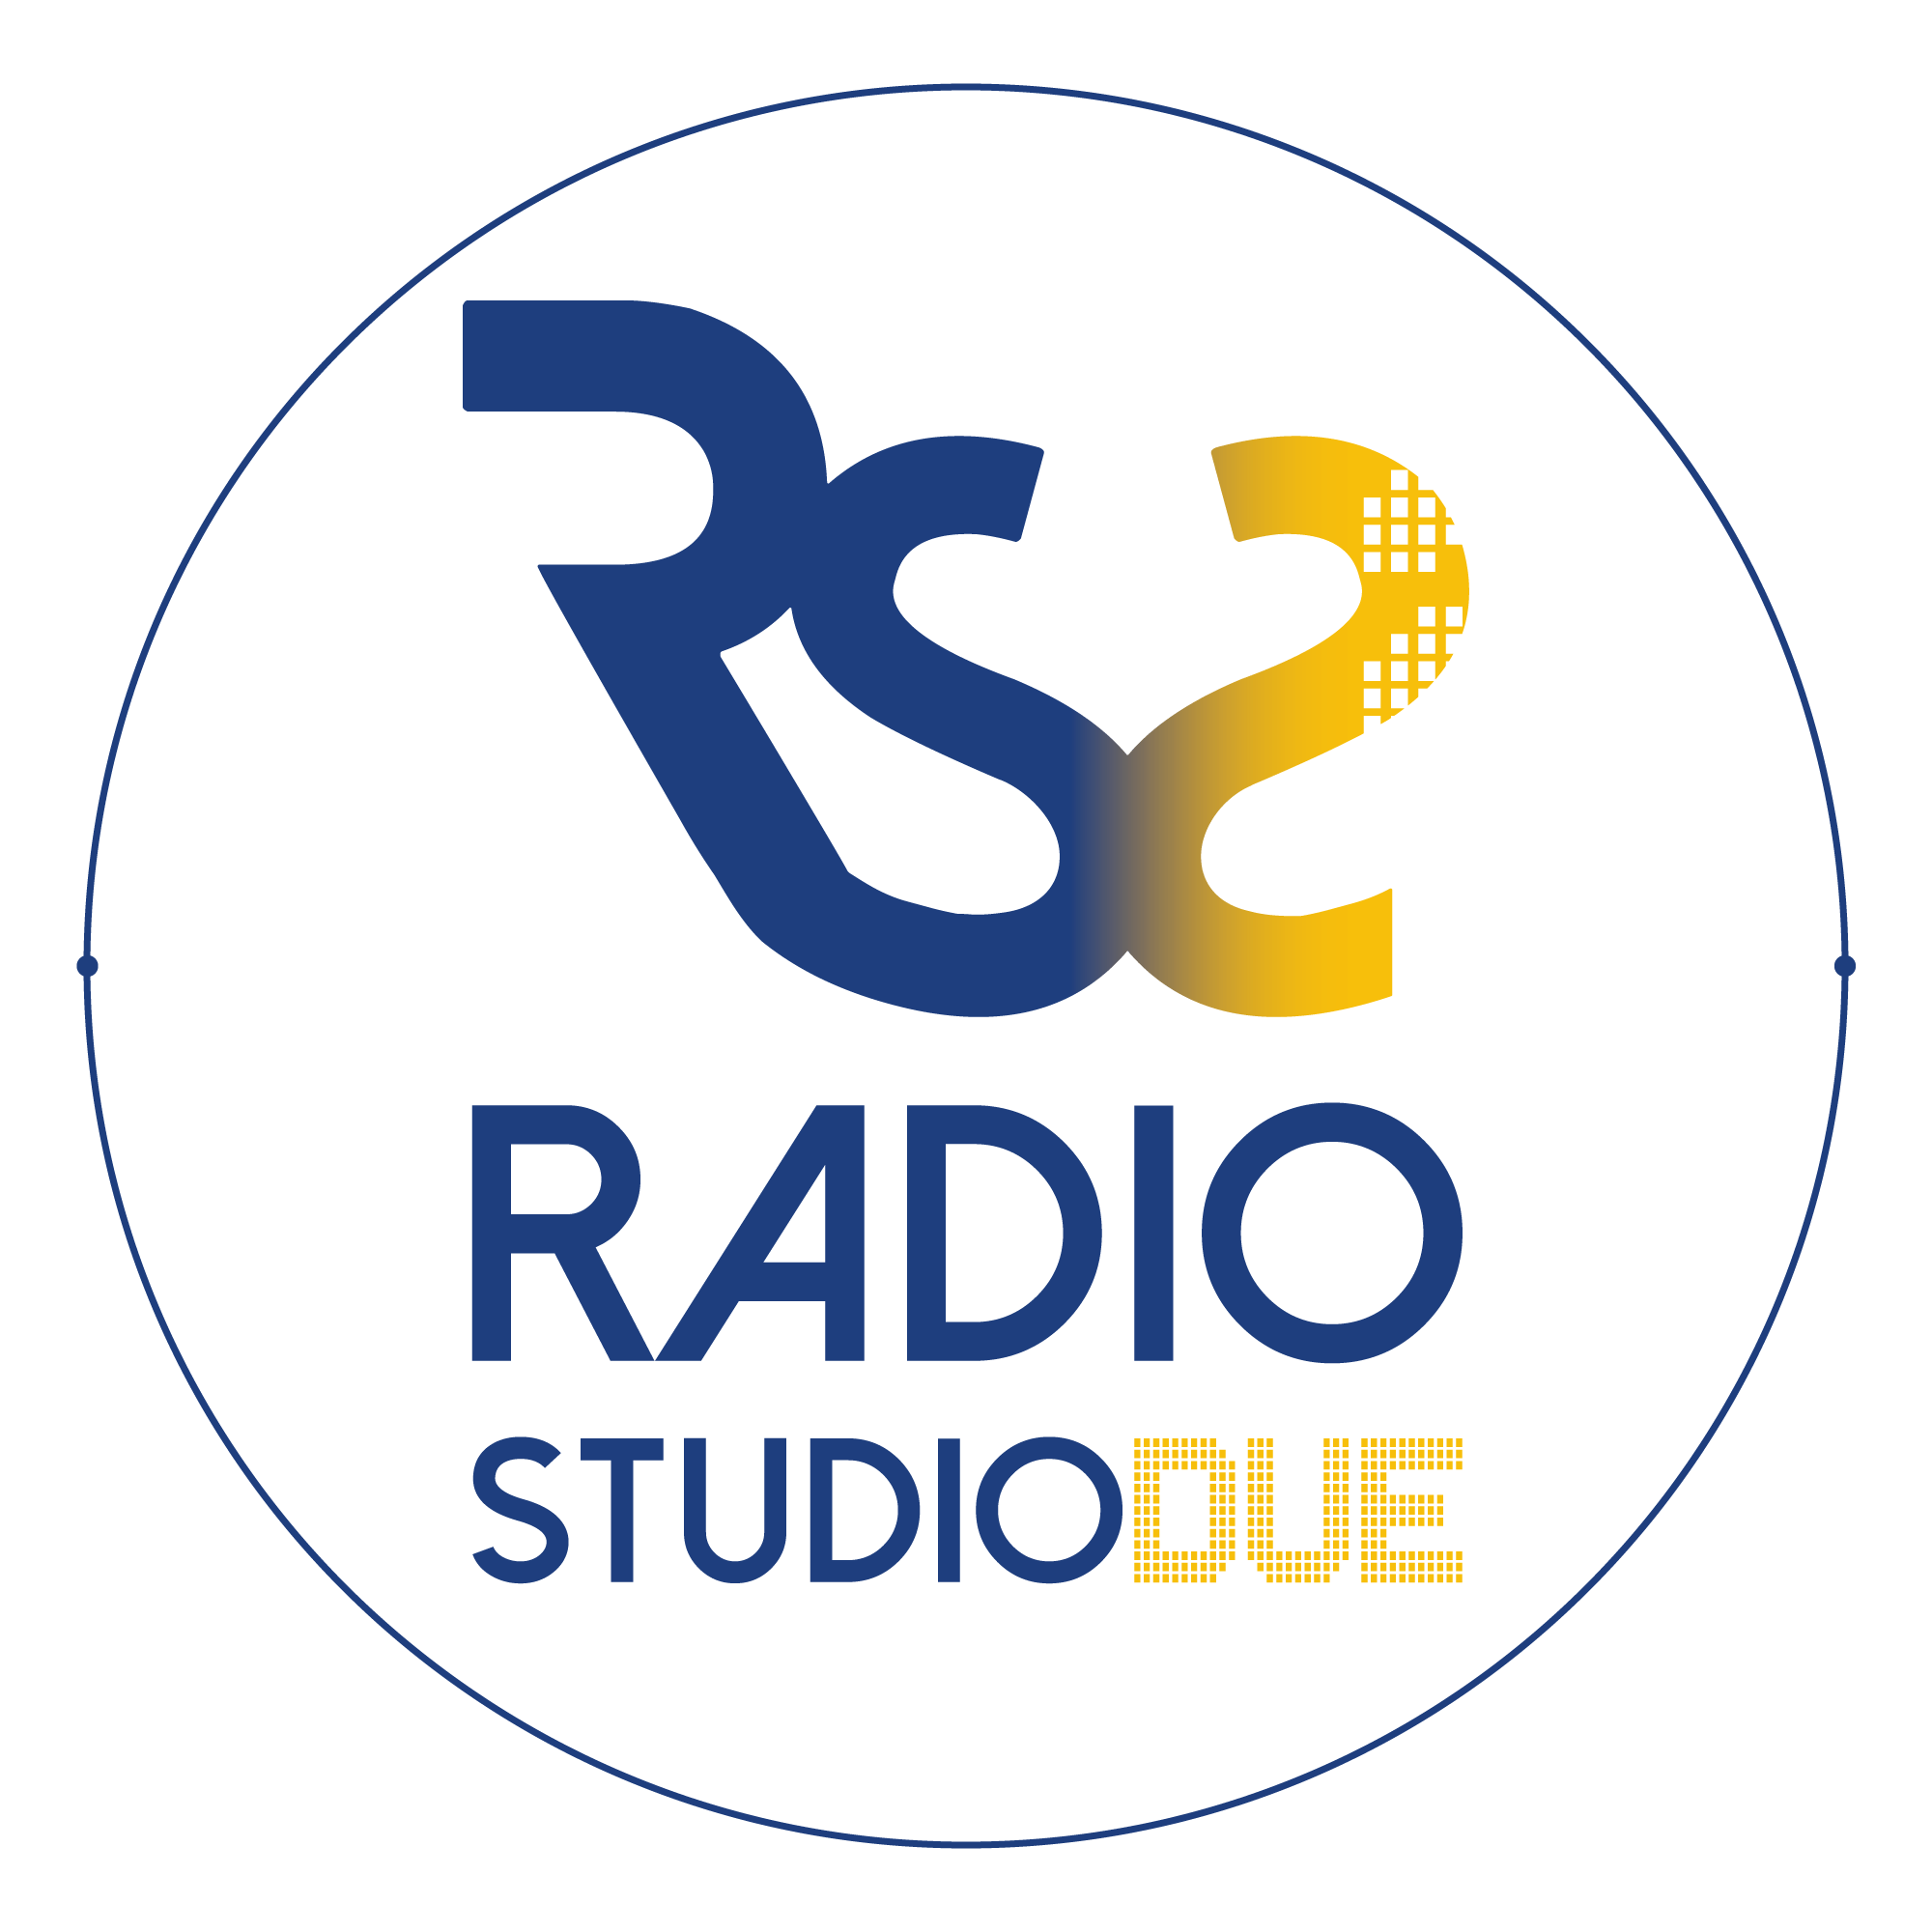 Radio Studiodue